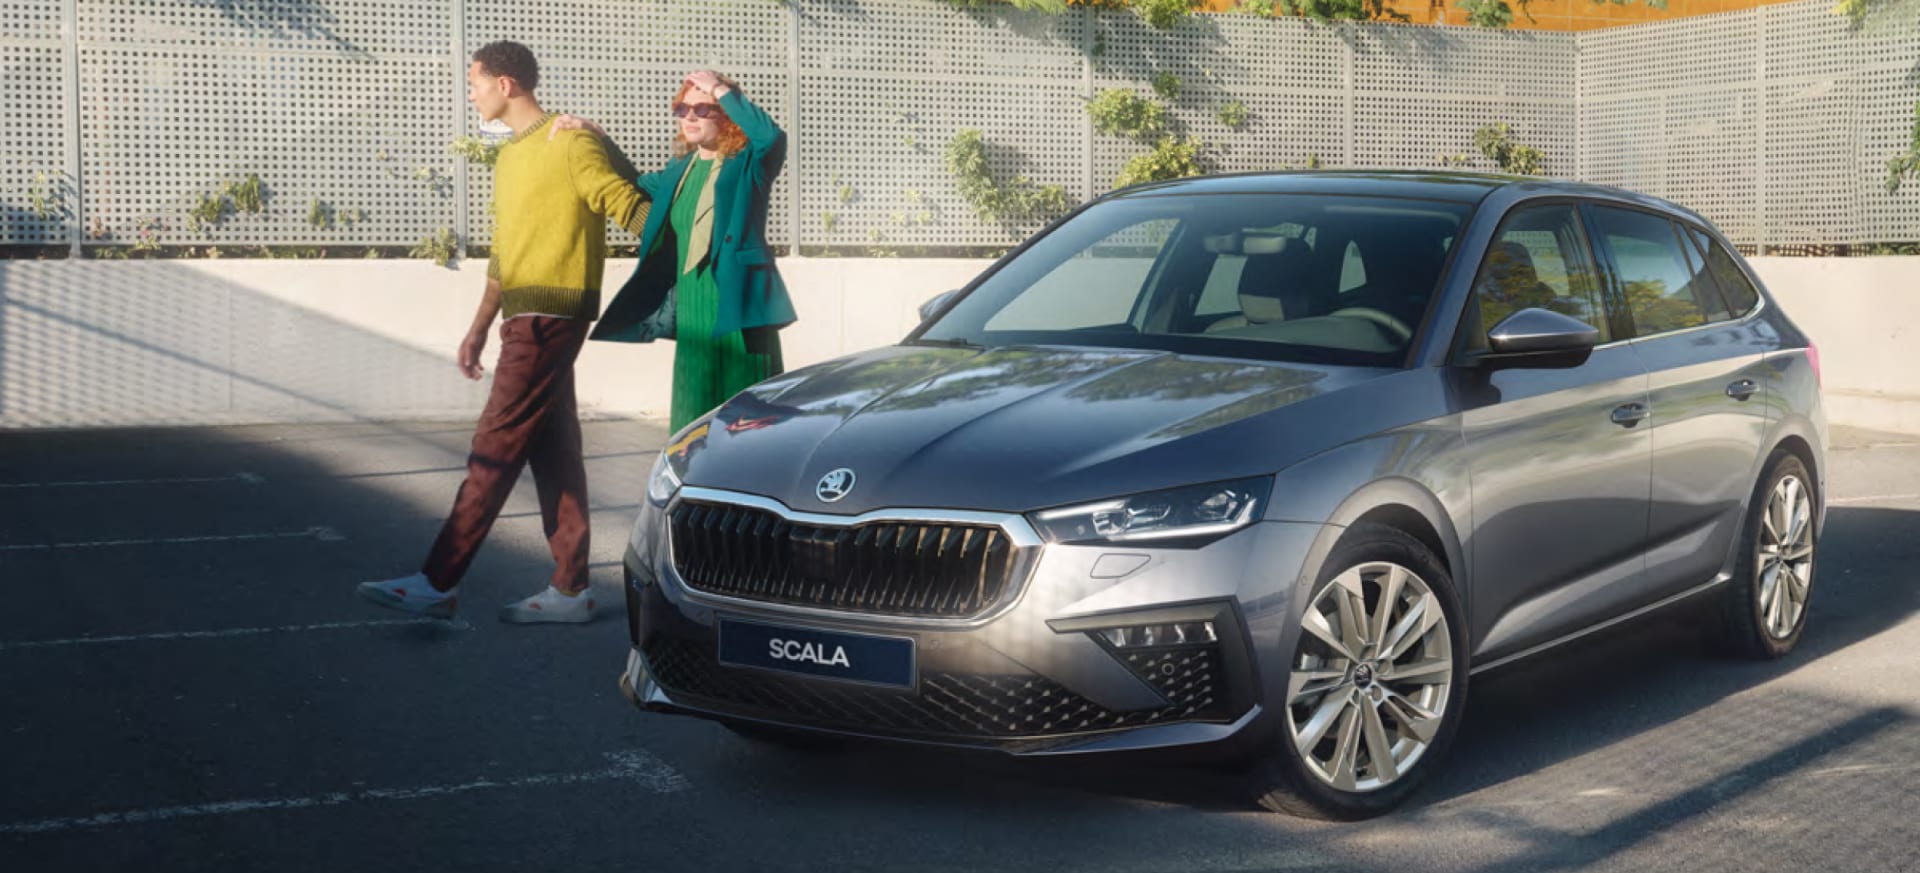 Introducing the New Škoda Scala